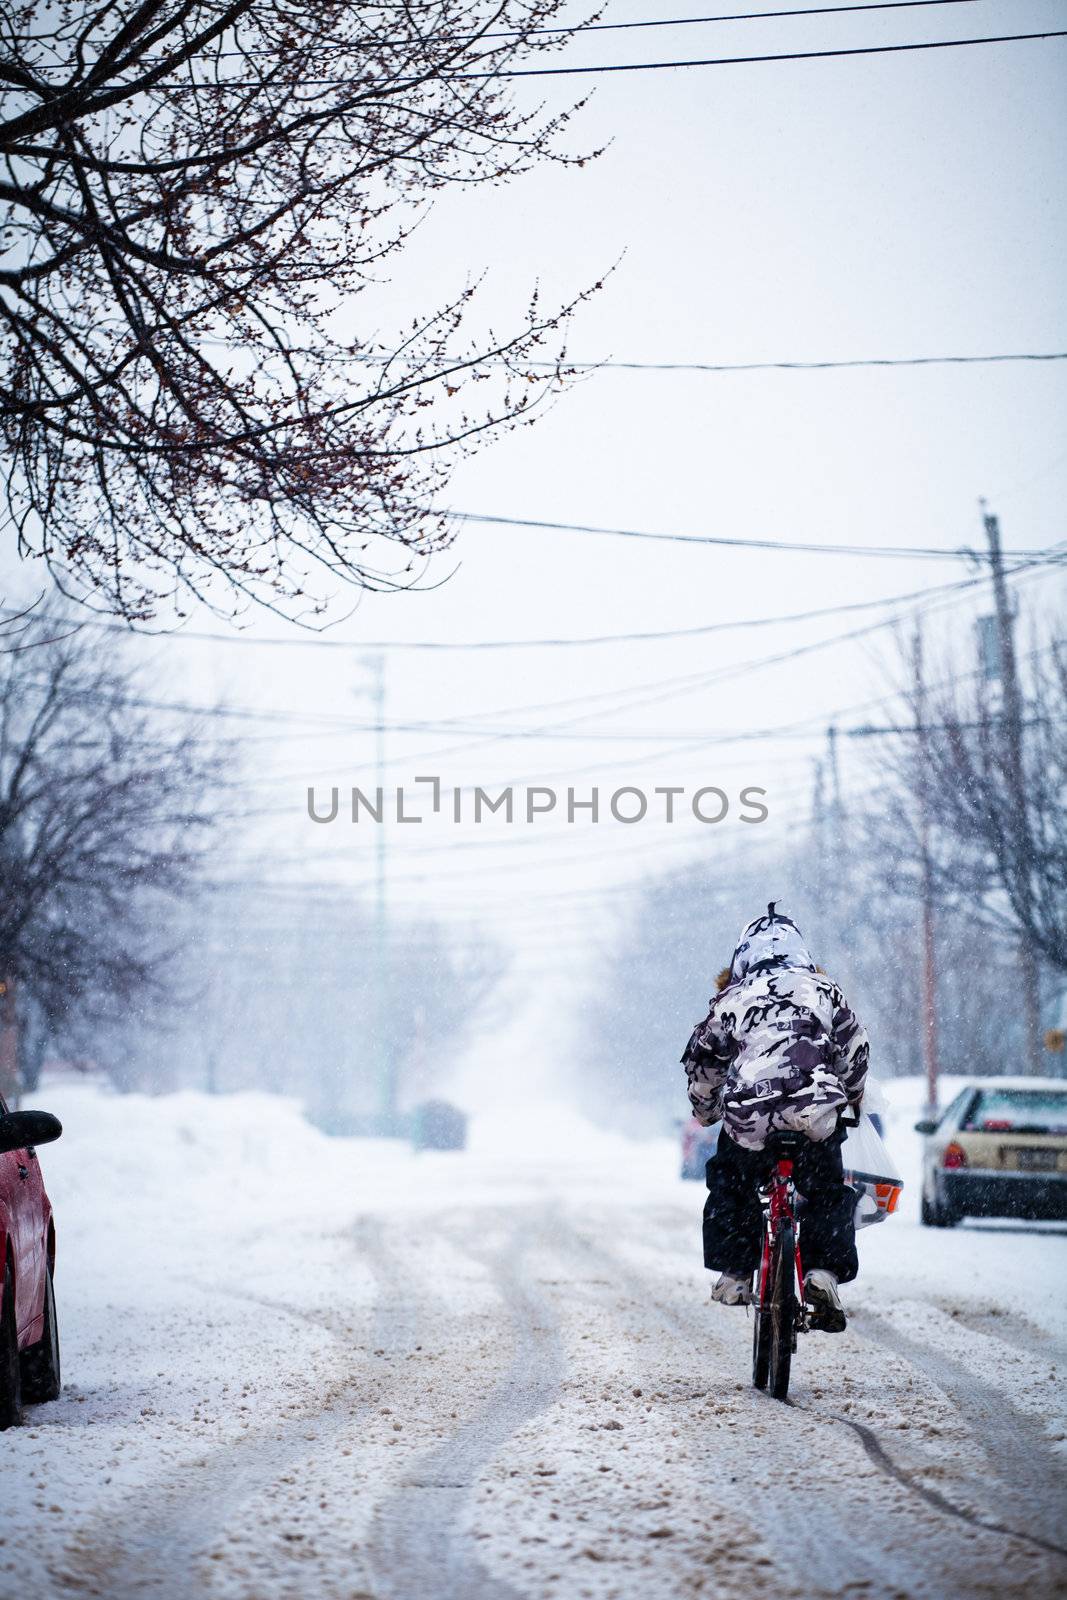 Courageous biker during a winter storm - editorial